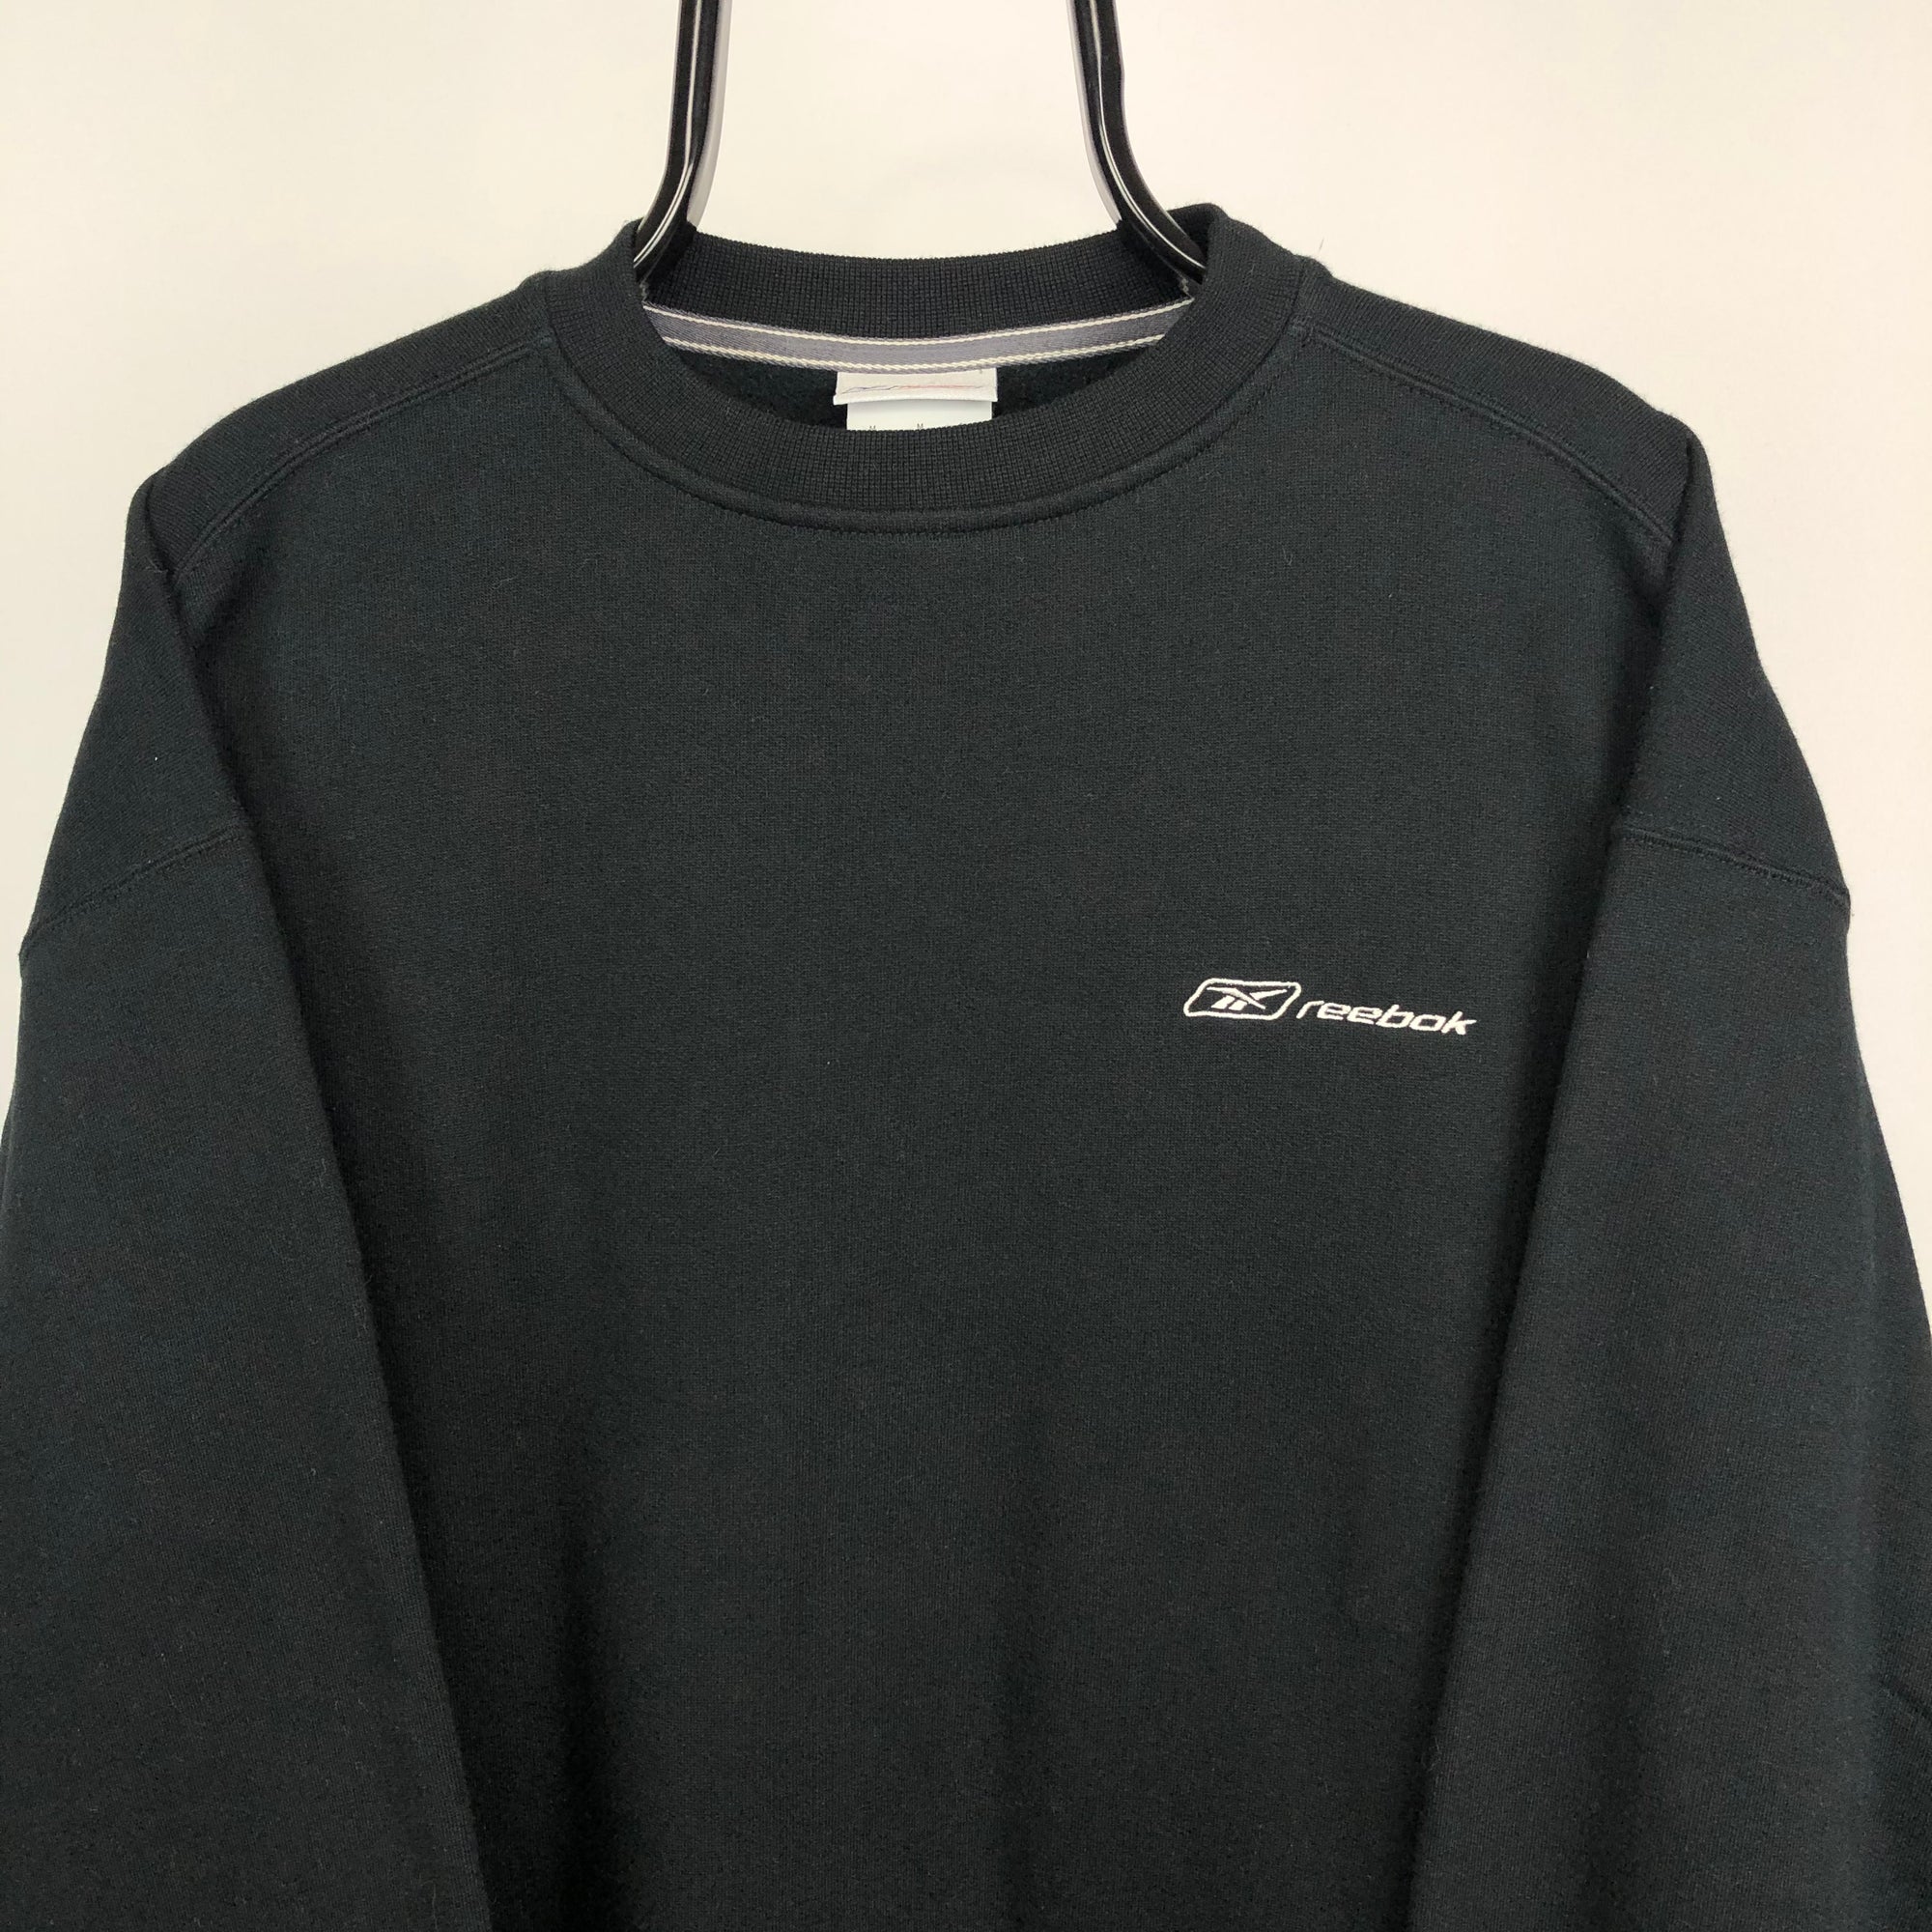 Vintage Reebok Embroidered Small Logo Sweatshirt in Black - Men's Large/Women's XL